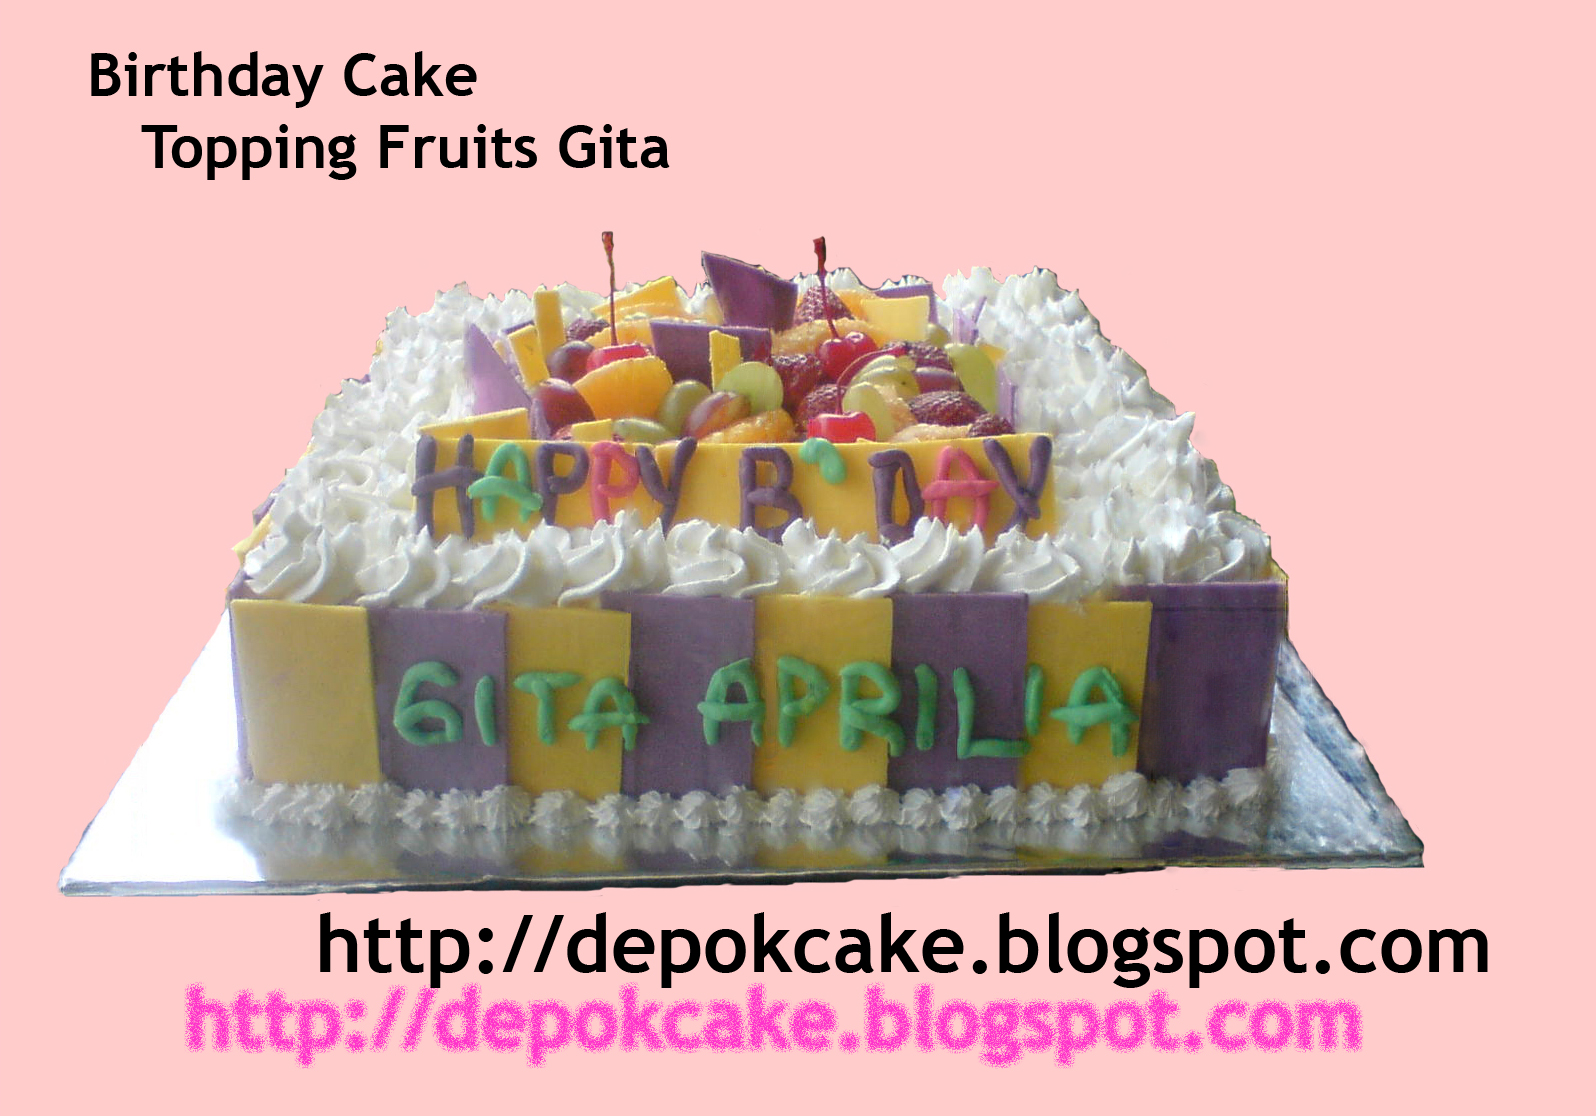 DEPOK CAKE Kue Ulang Tahun Untuk Dewasa dan Remaja